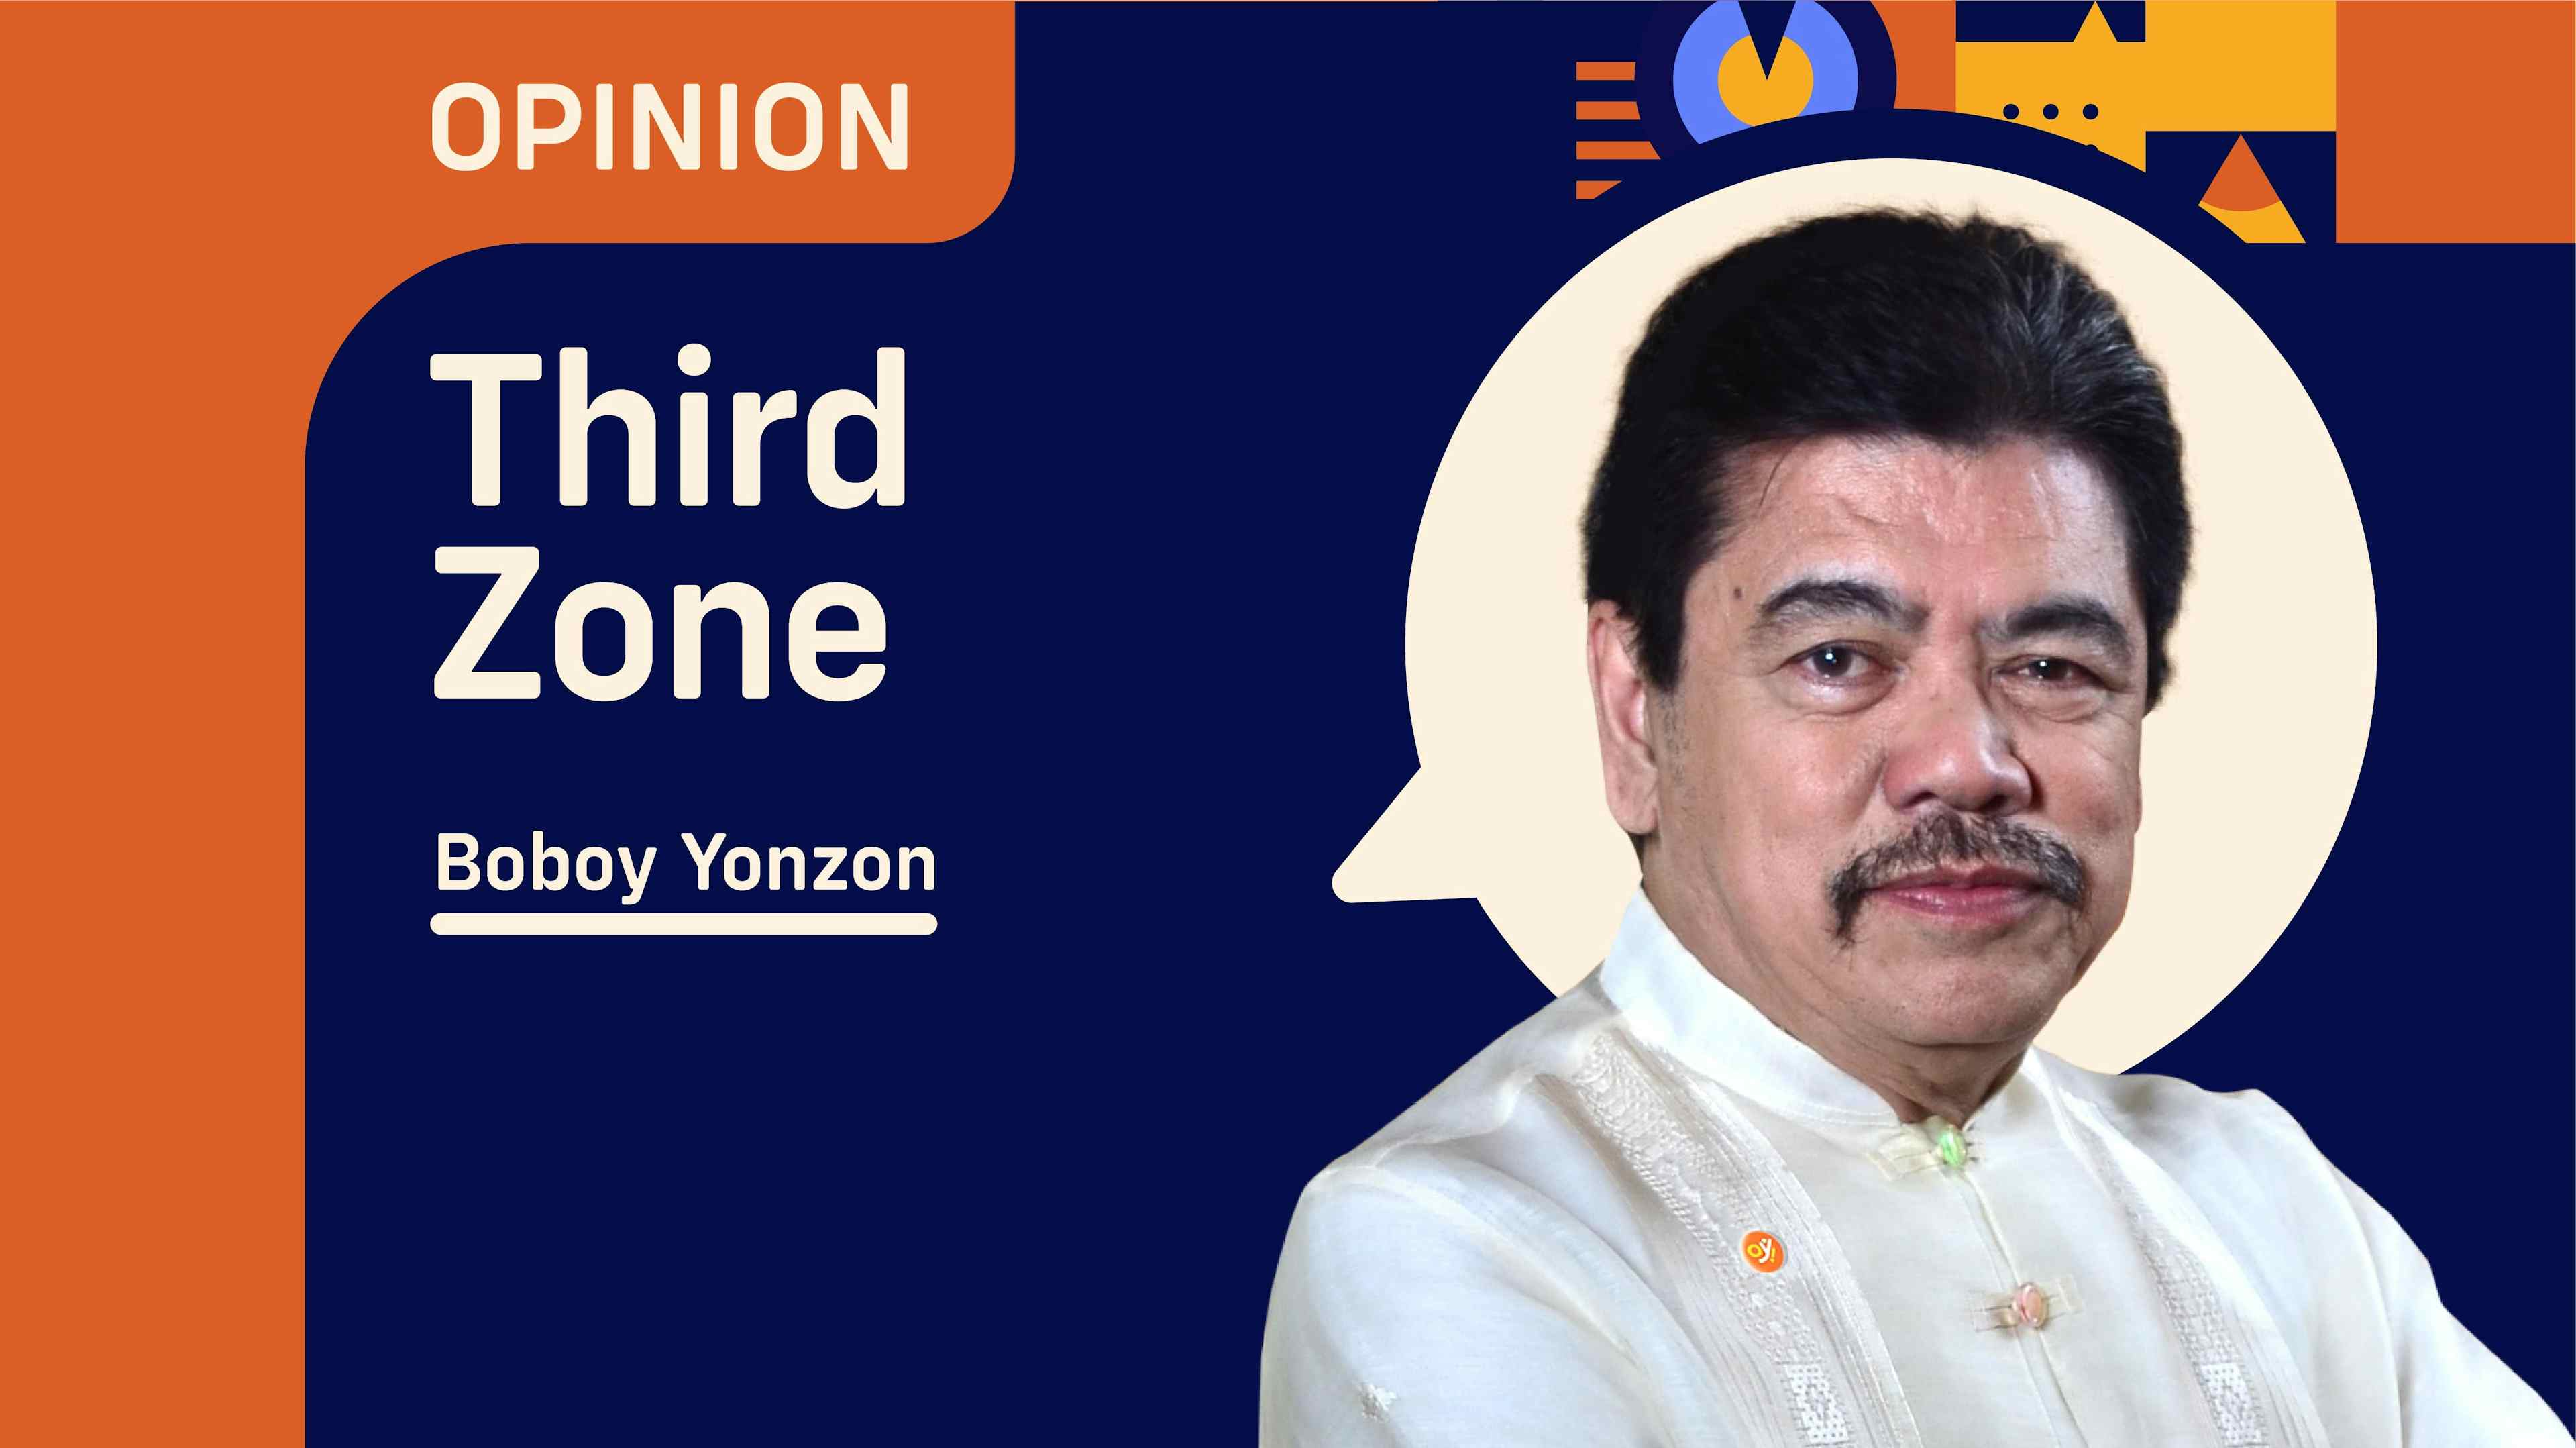 Third Zone by Boboy Yonzon